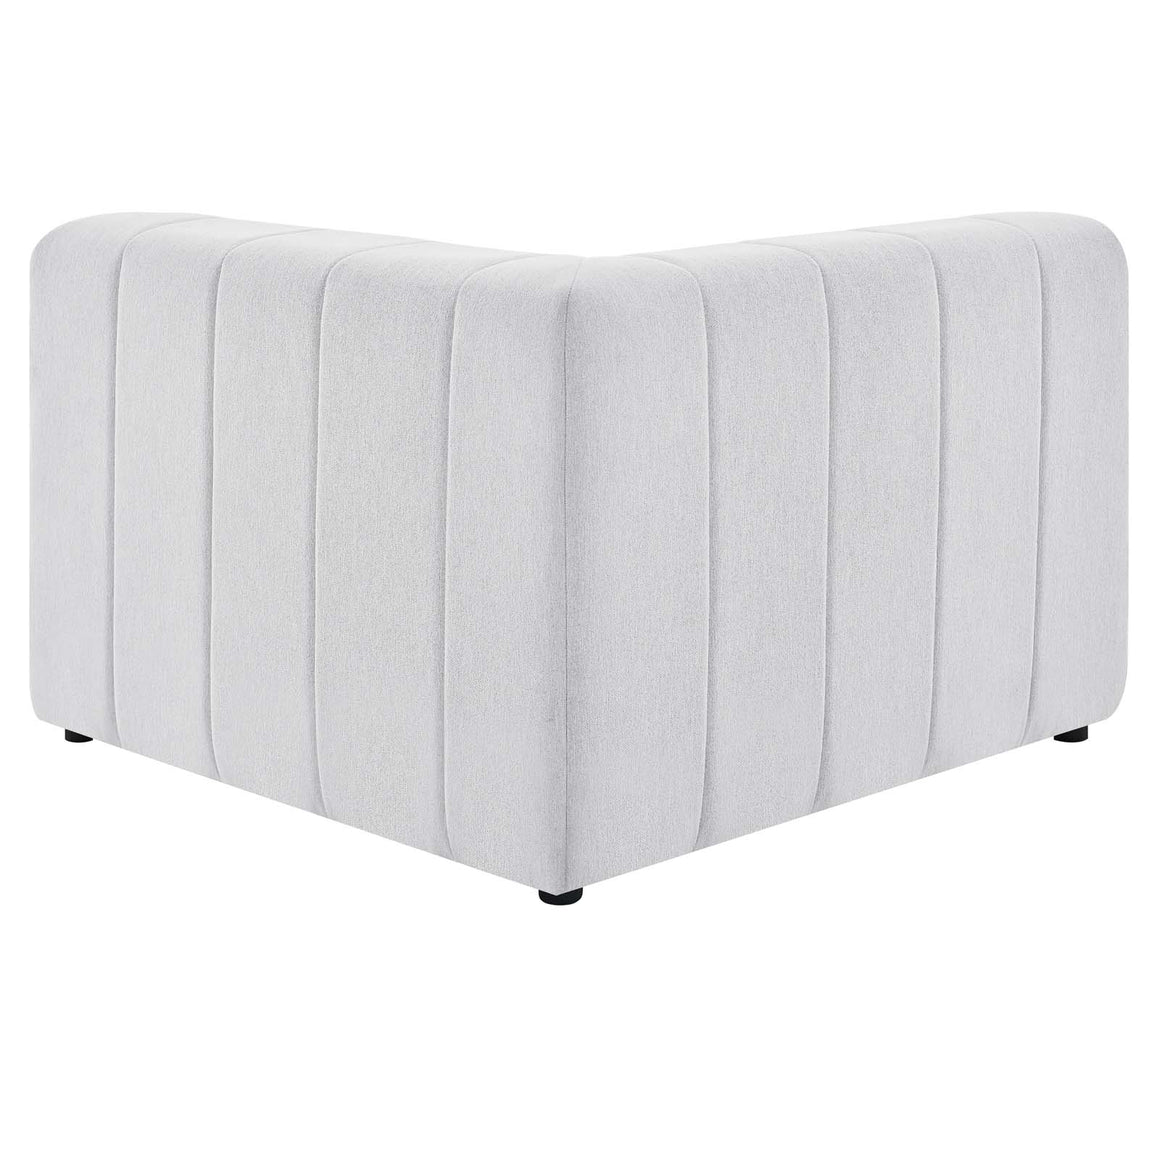 Bartlett Upholstered Fabric Left-Arm Chair